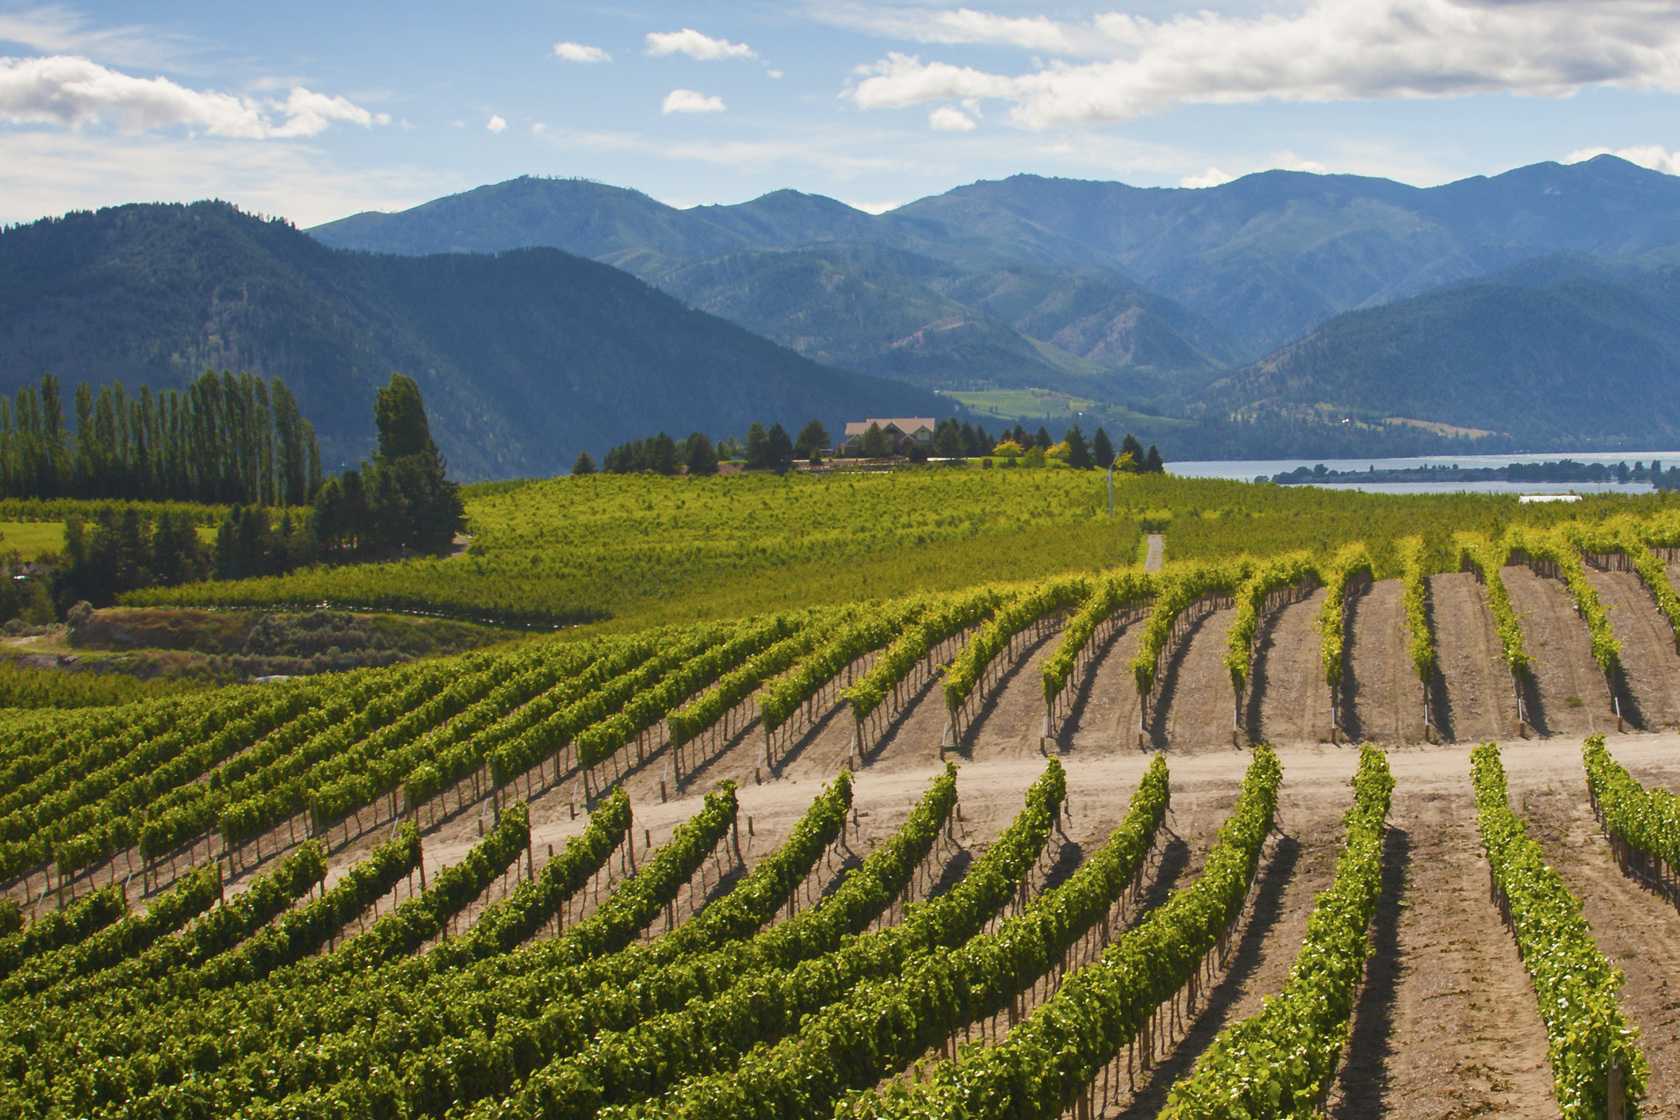 Celebrating Washington wine with a vineyard view